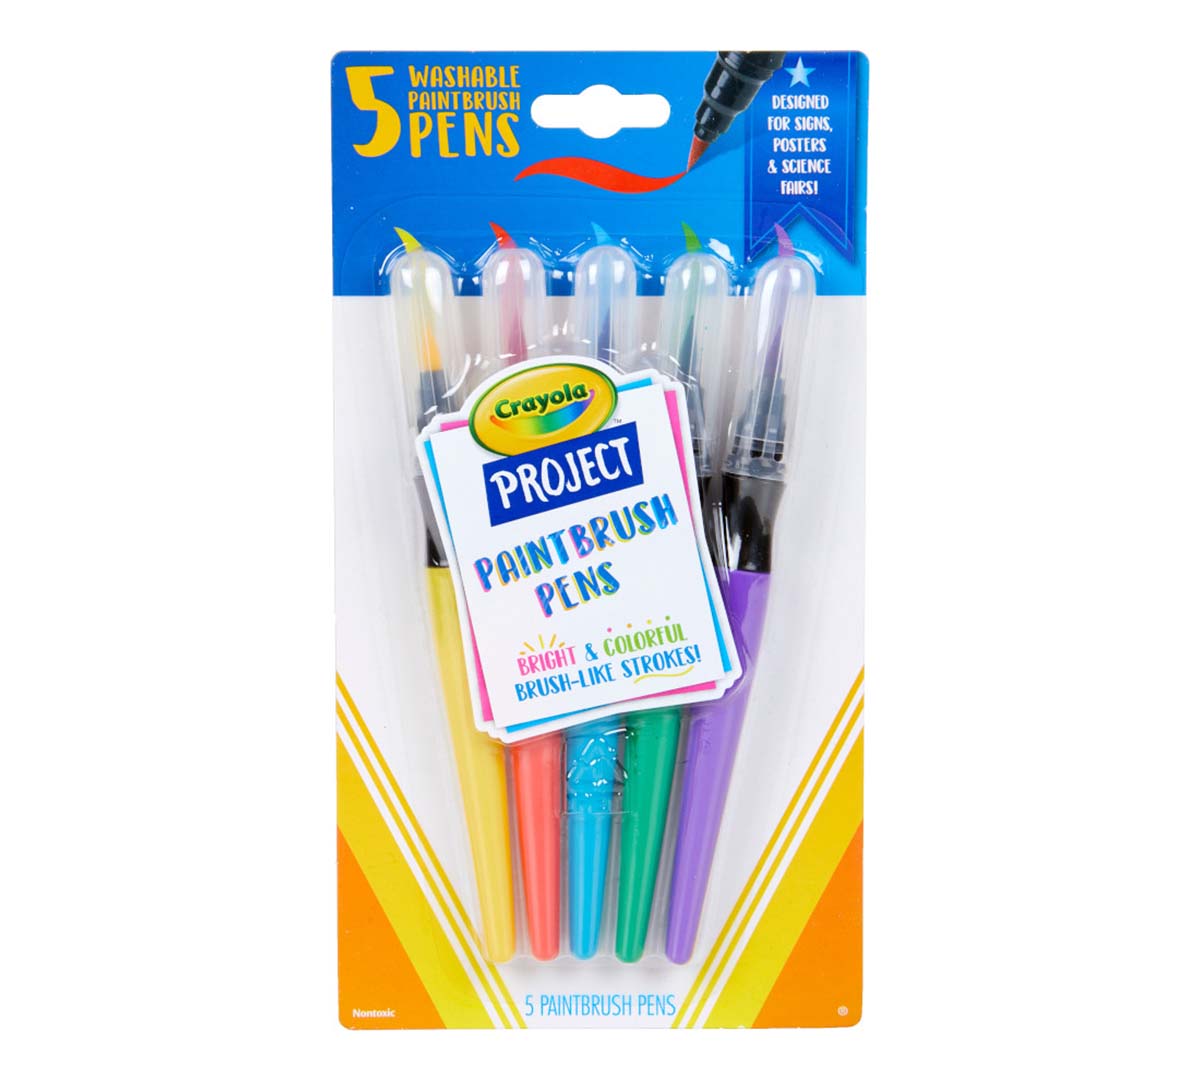 Touch-Up Paint Pen 5-Pack